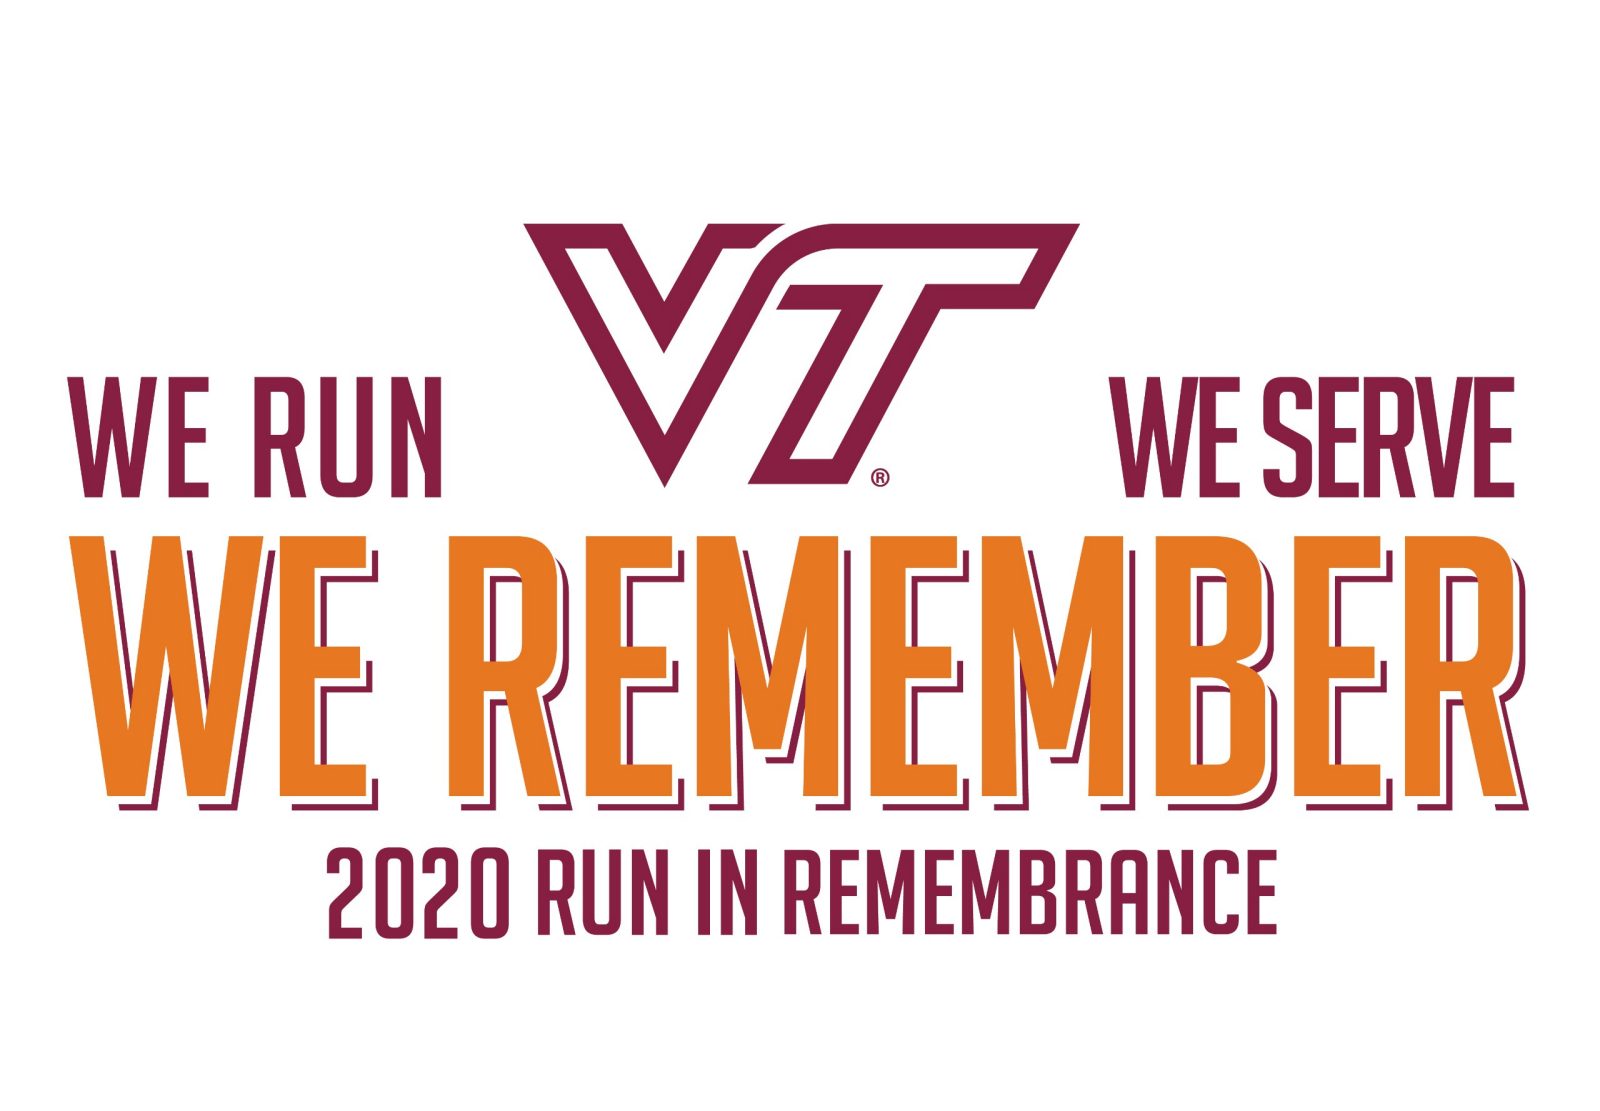 2021 Virtual Run in Remembrance announced for April 16-18